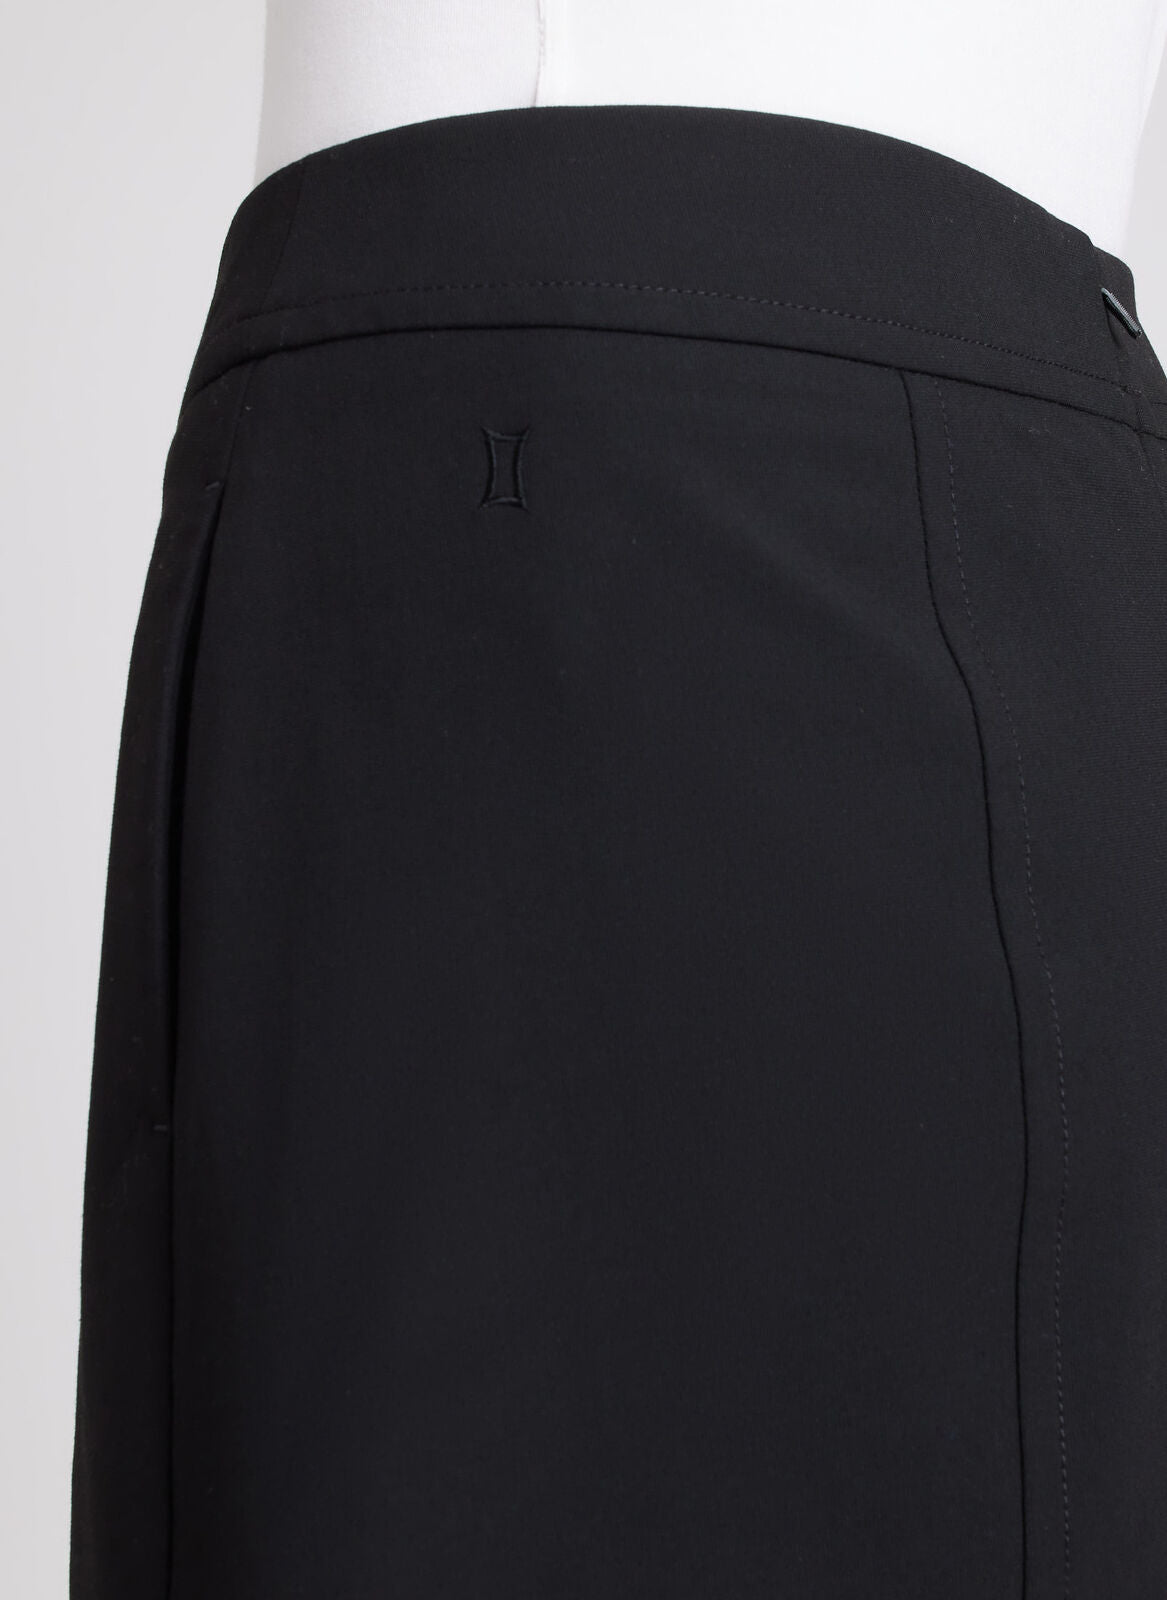 Kit and Ace — Seymour Short Skirt